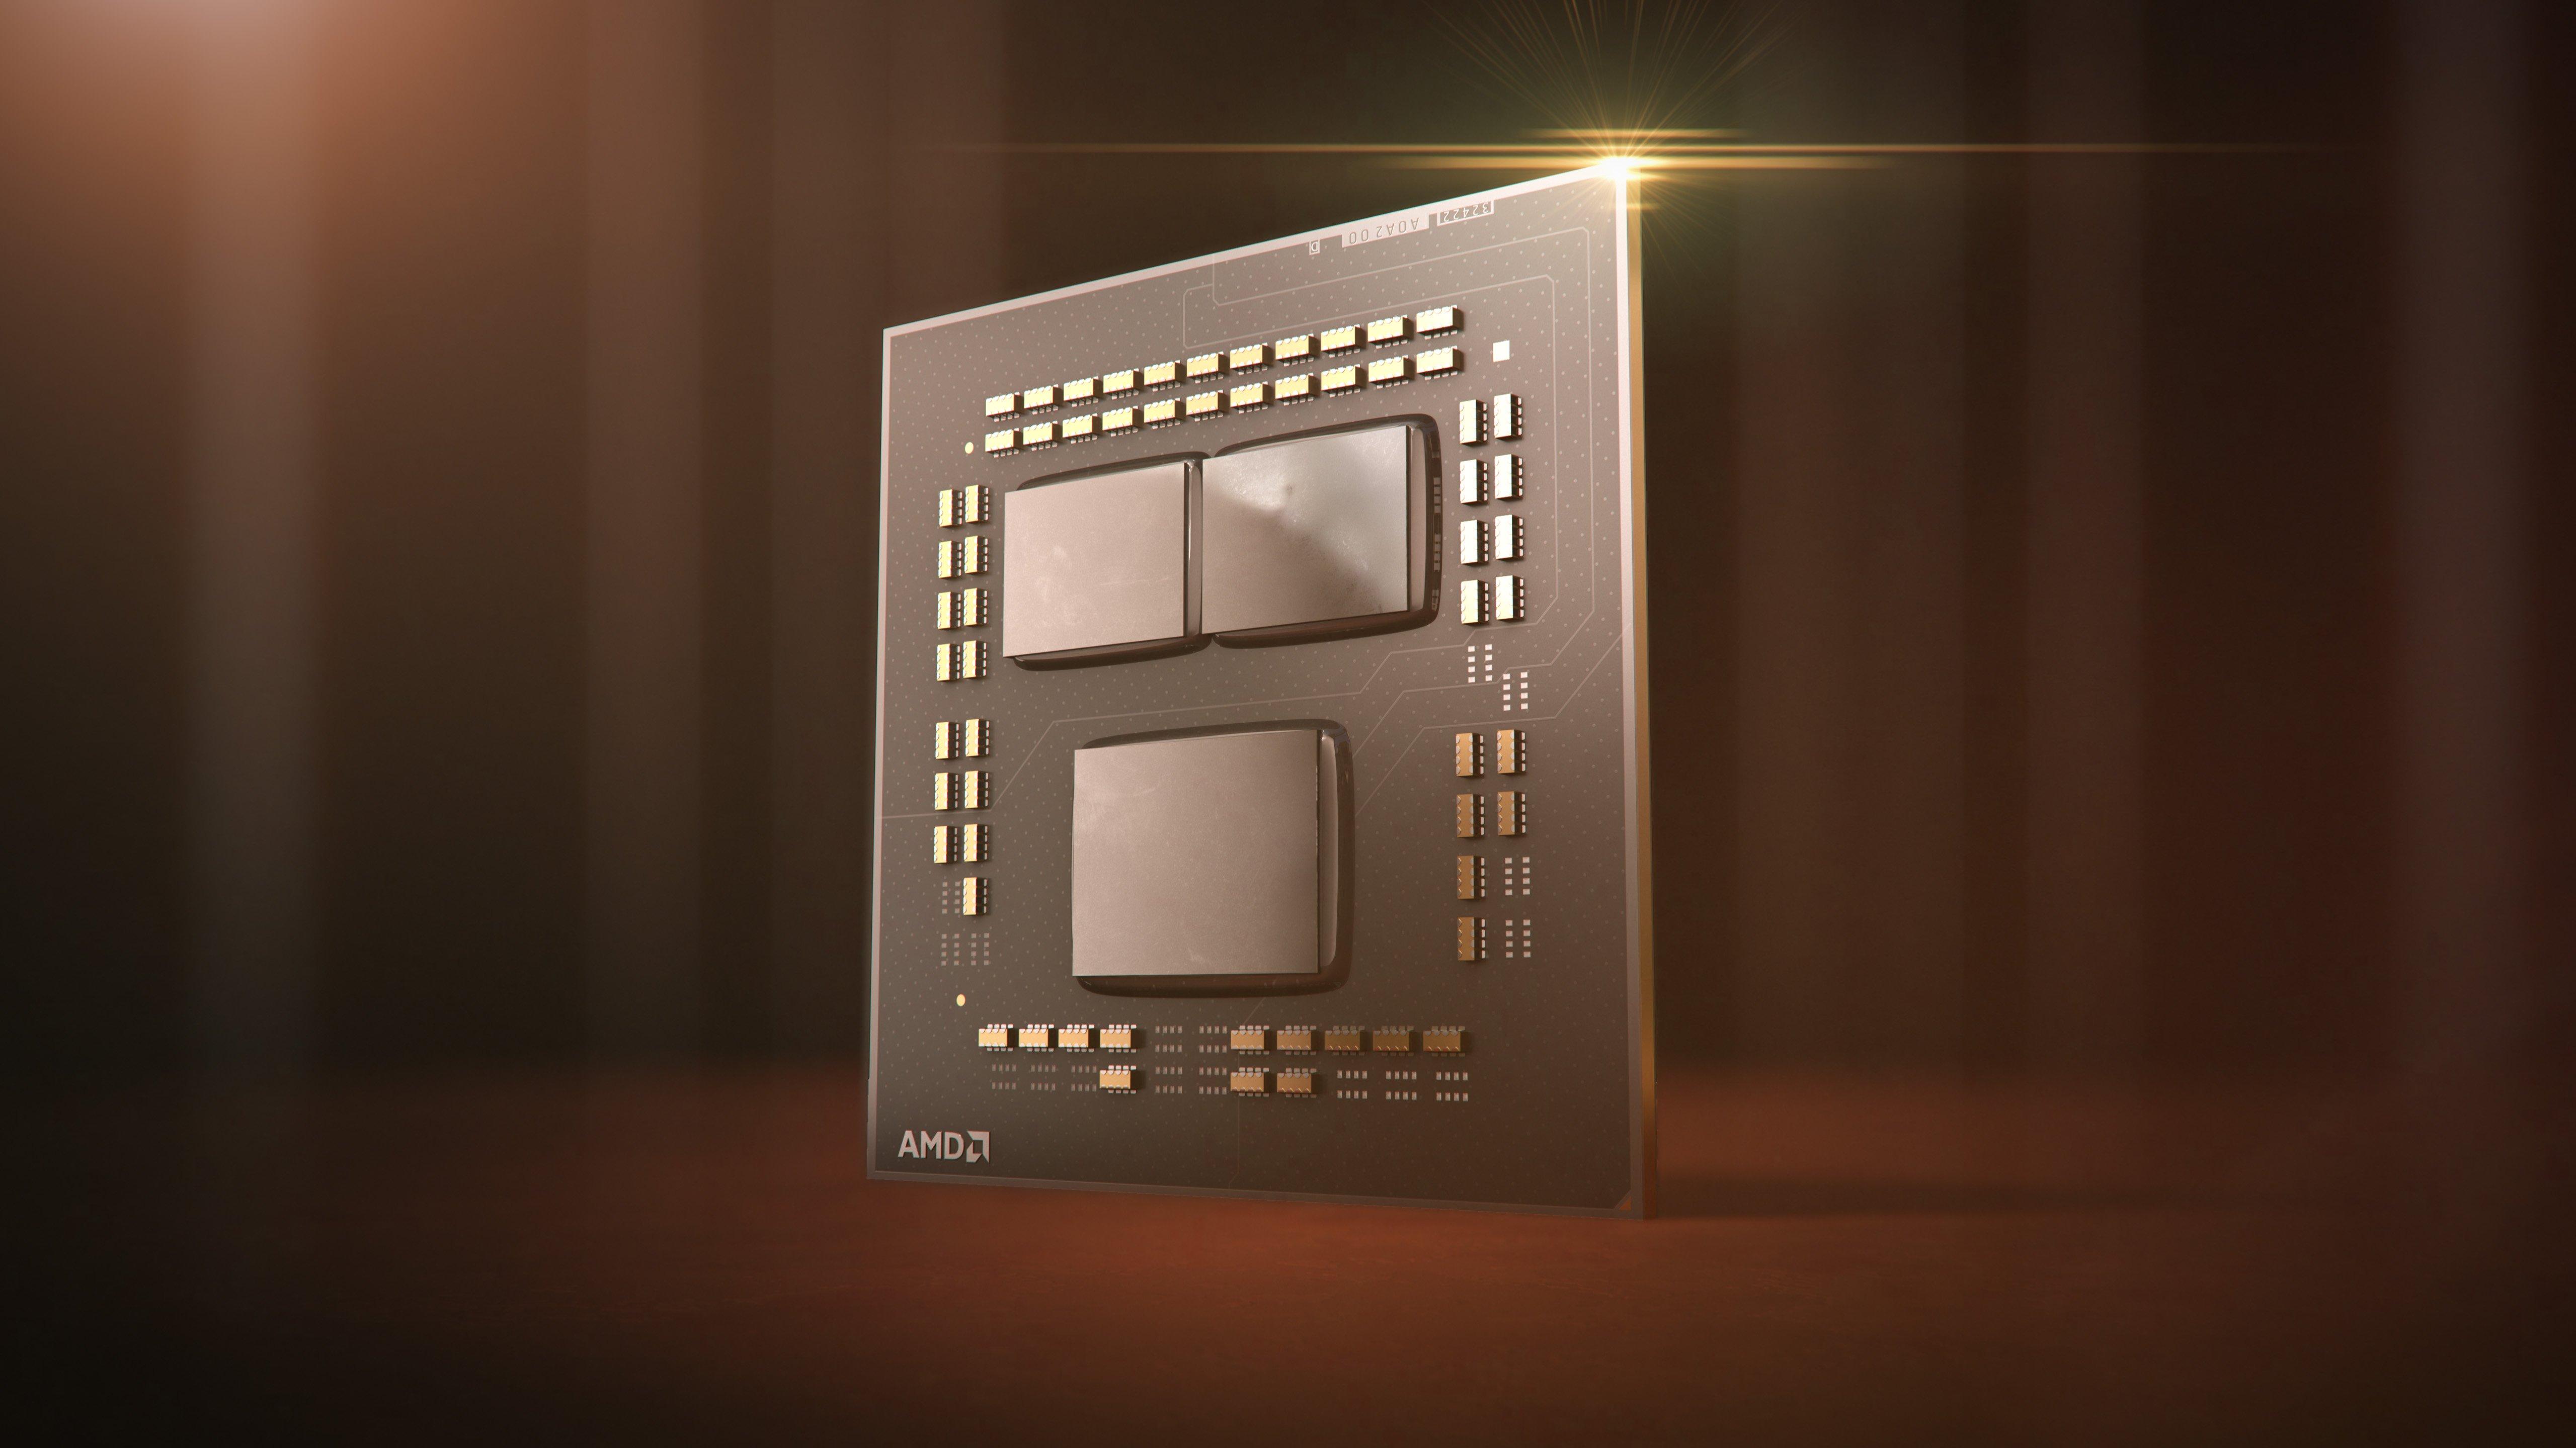 AMD Ryzen 5 5500 6 Core 12 Thread Unlocked Desktop Processor with Wraith  Stealth Cooler - 6 cores & 12 threads - 3.6 GHz- 4.2 GHz CPU Speed 